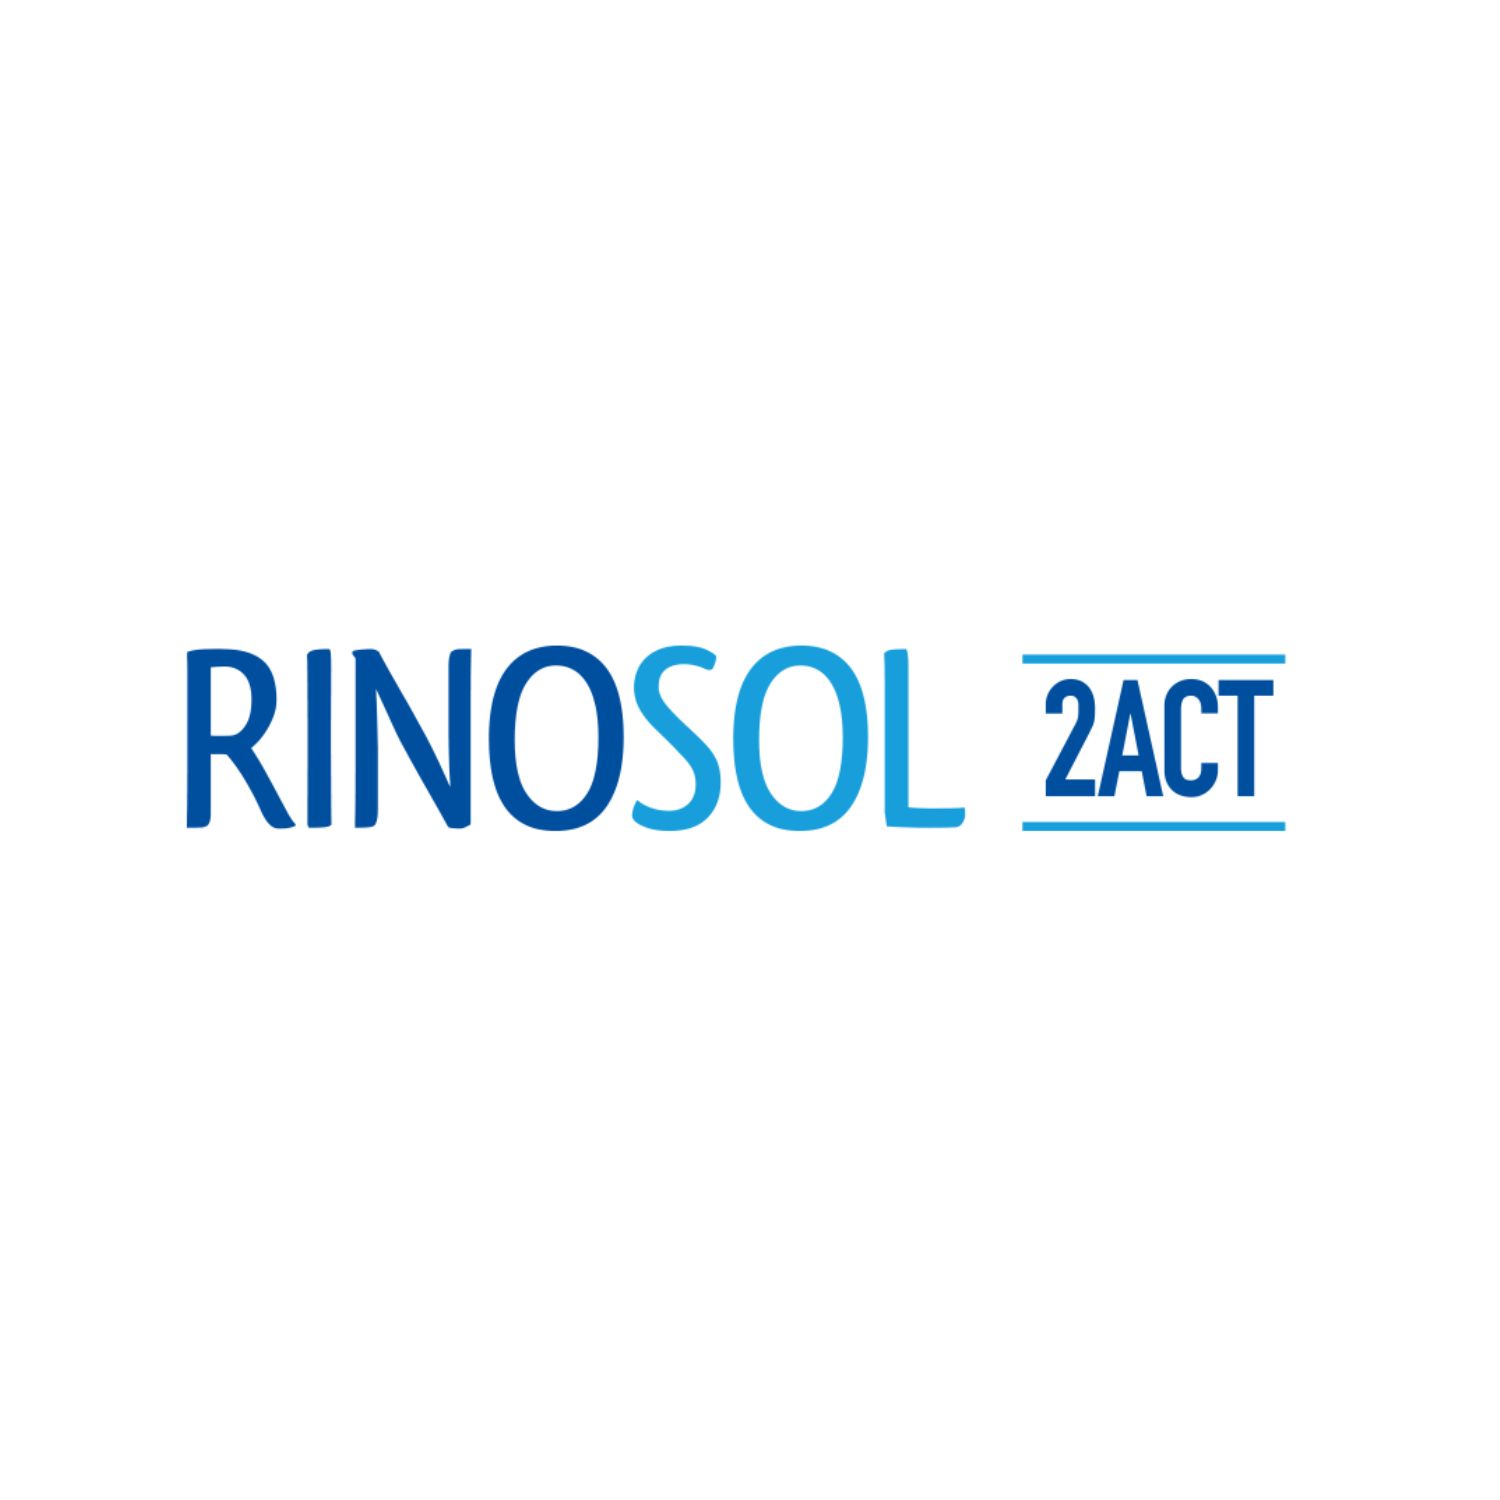 Rinosol